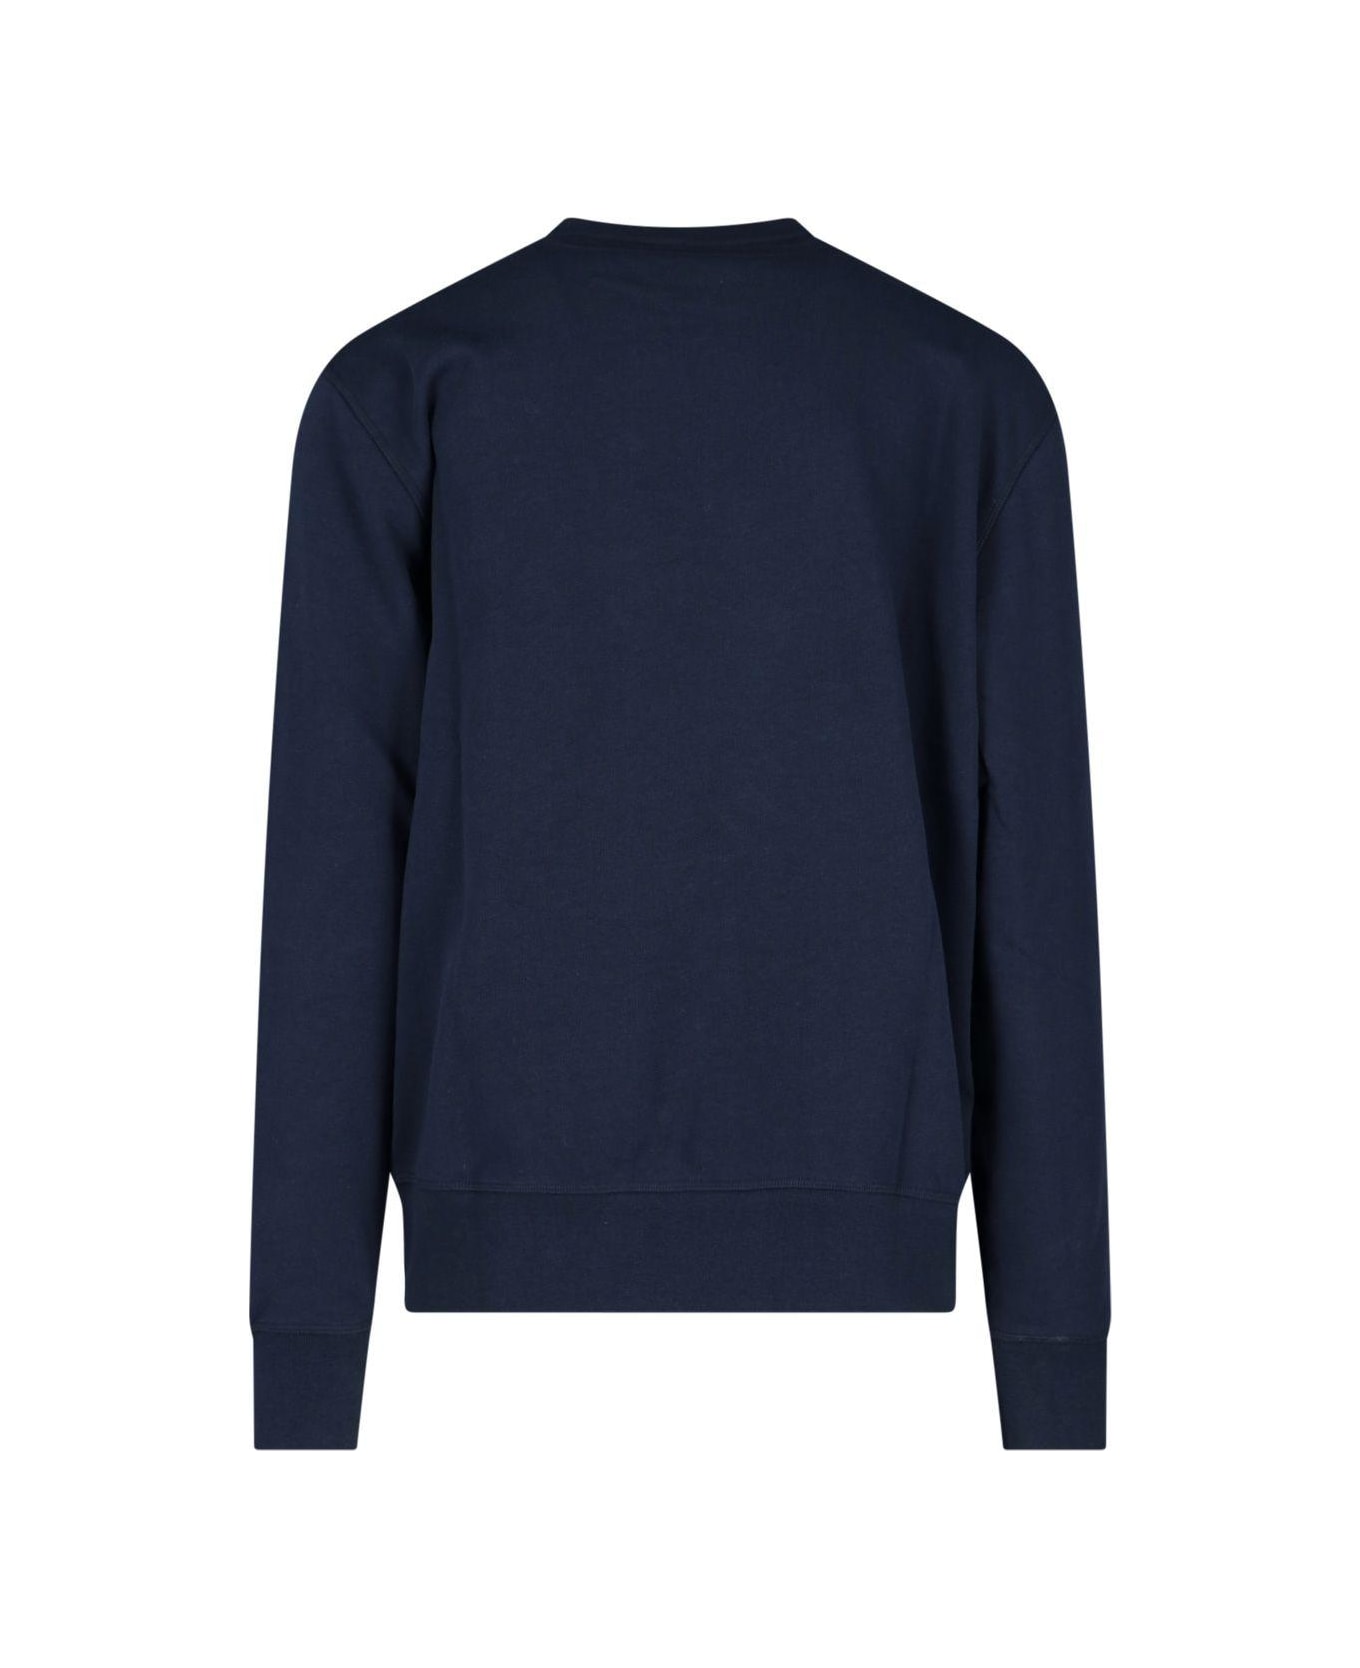 Alexander McQueen Printed Crewneck Sweatshirt - Blue